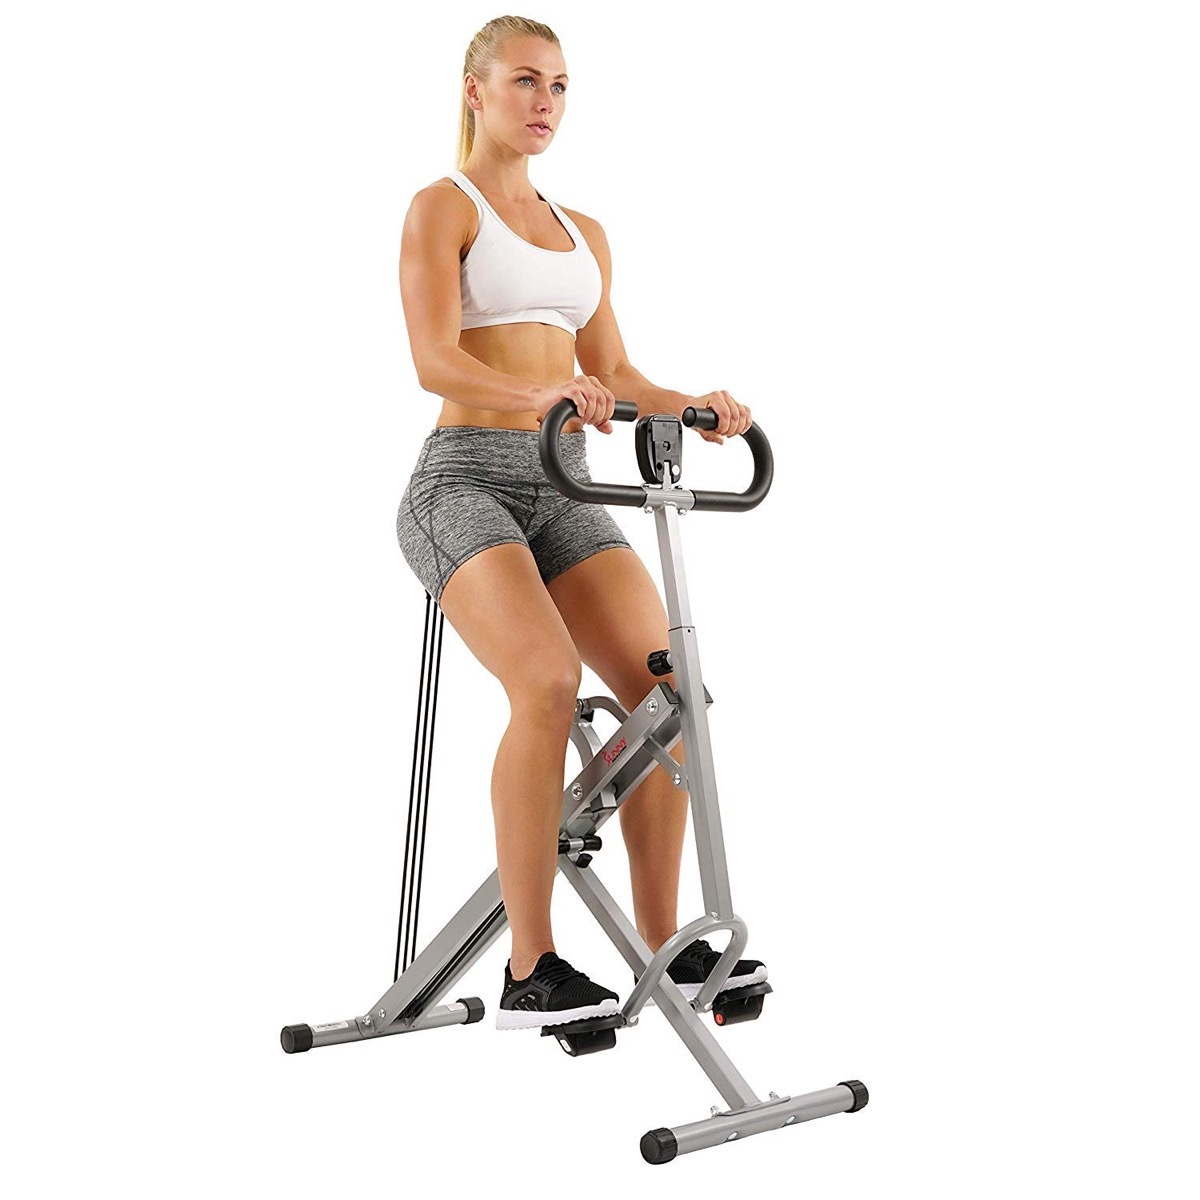 Woman on fitness machine